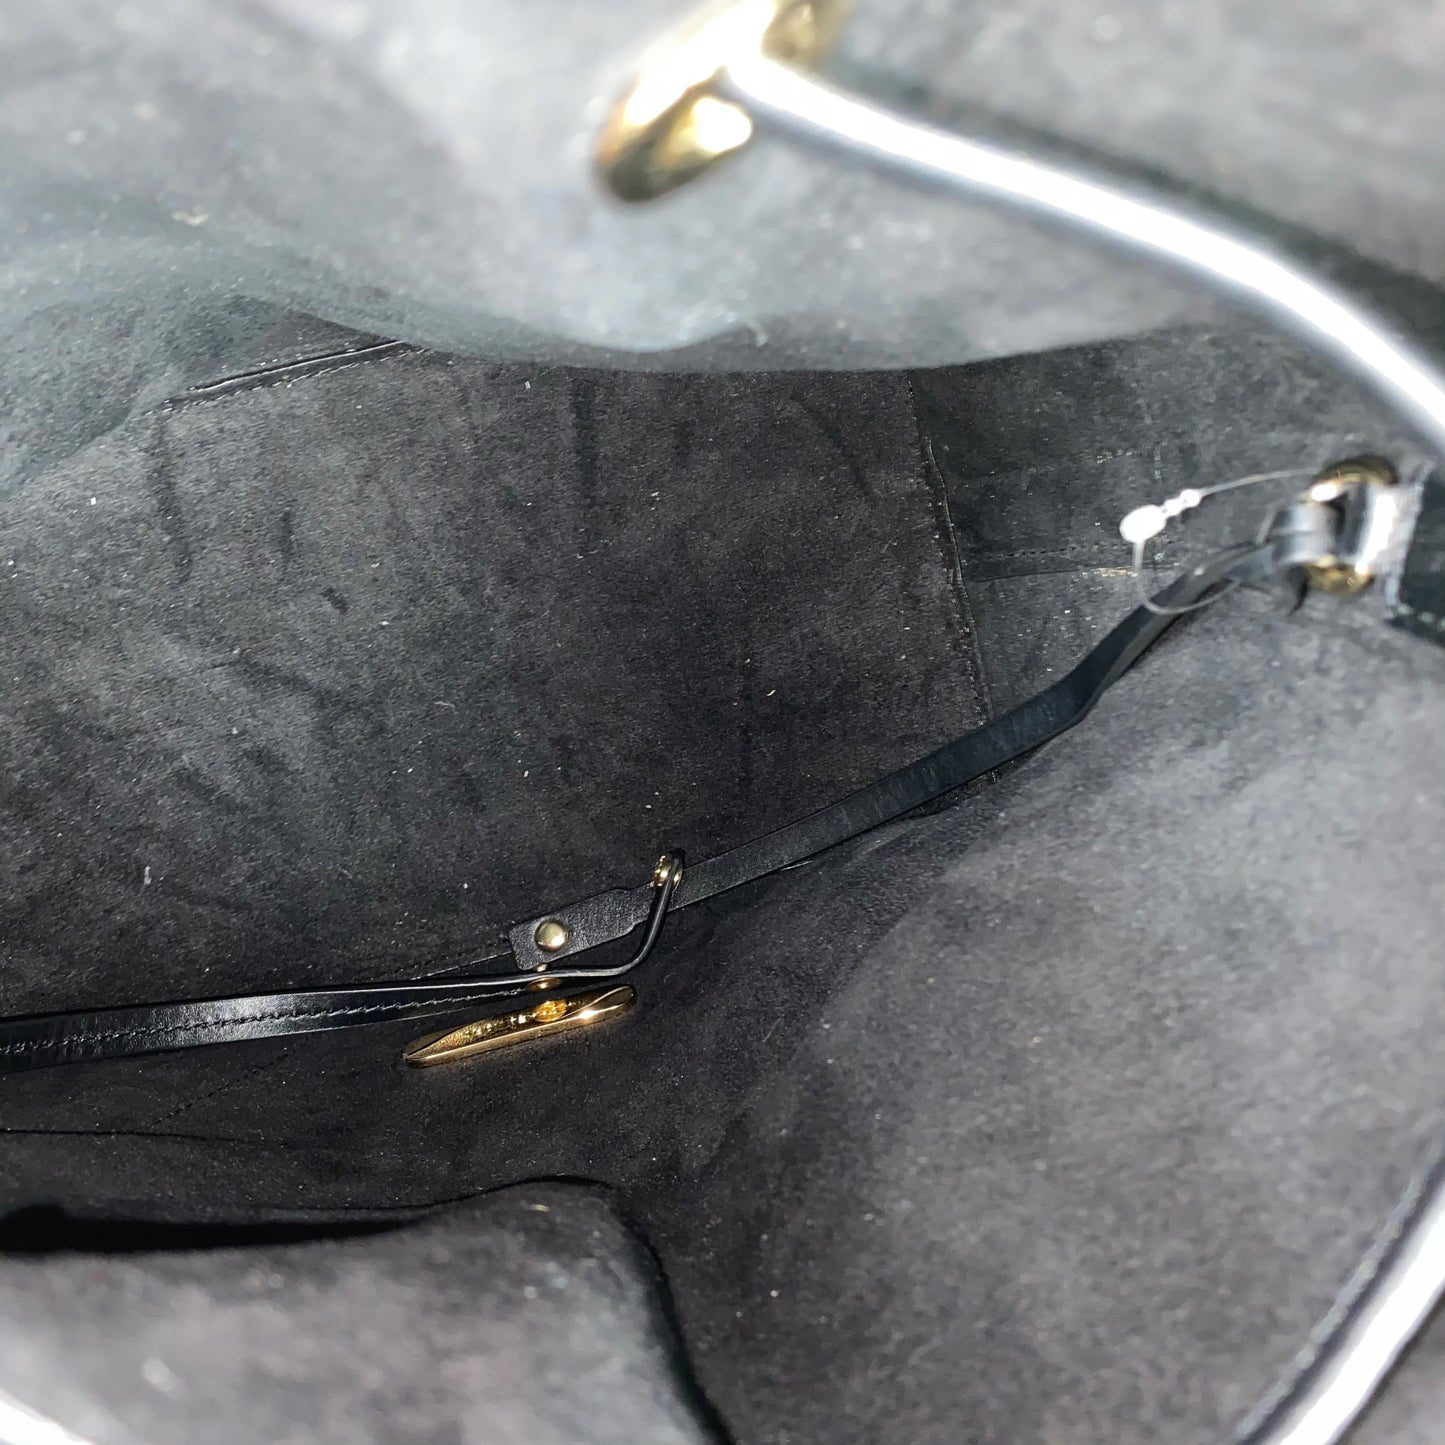 Michael Kors Cary Leather Bucket Bag